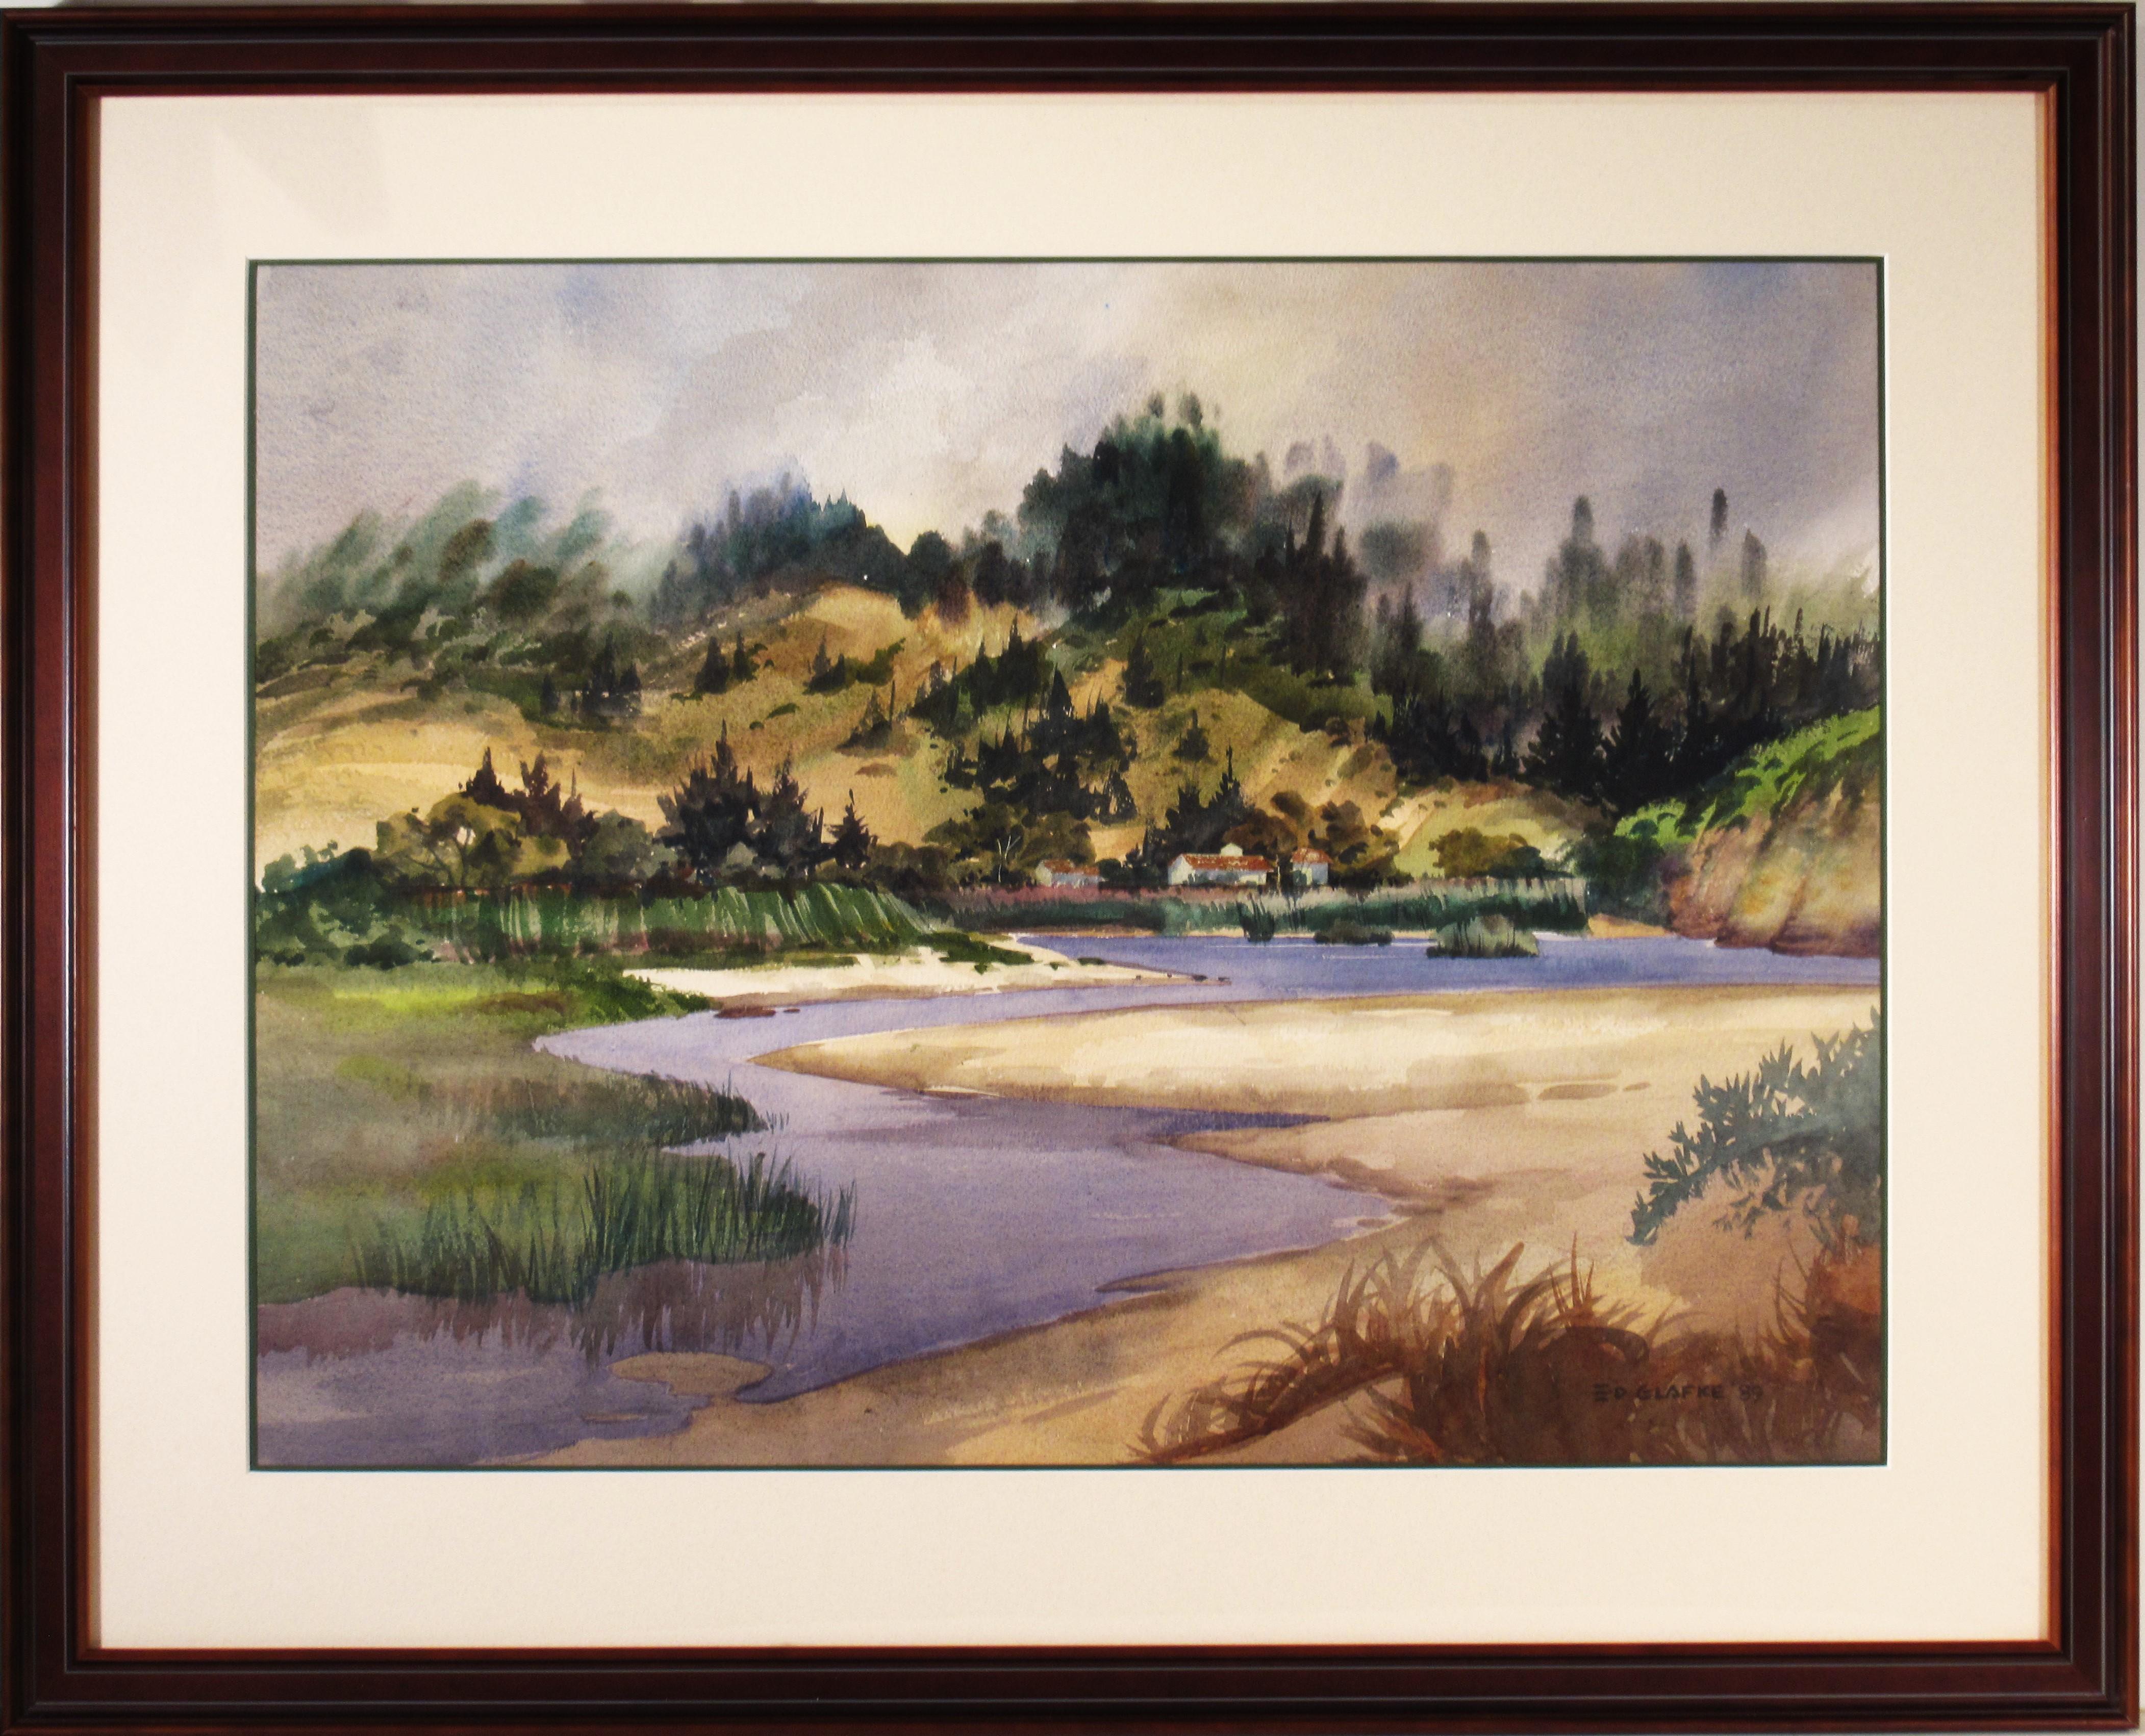 Edward Glafke Figurative Art - "Carmel River, Carmel, California" Large watercolor